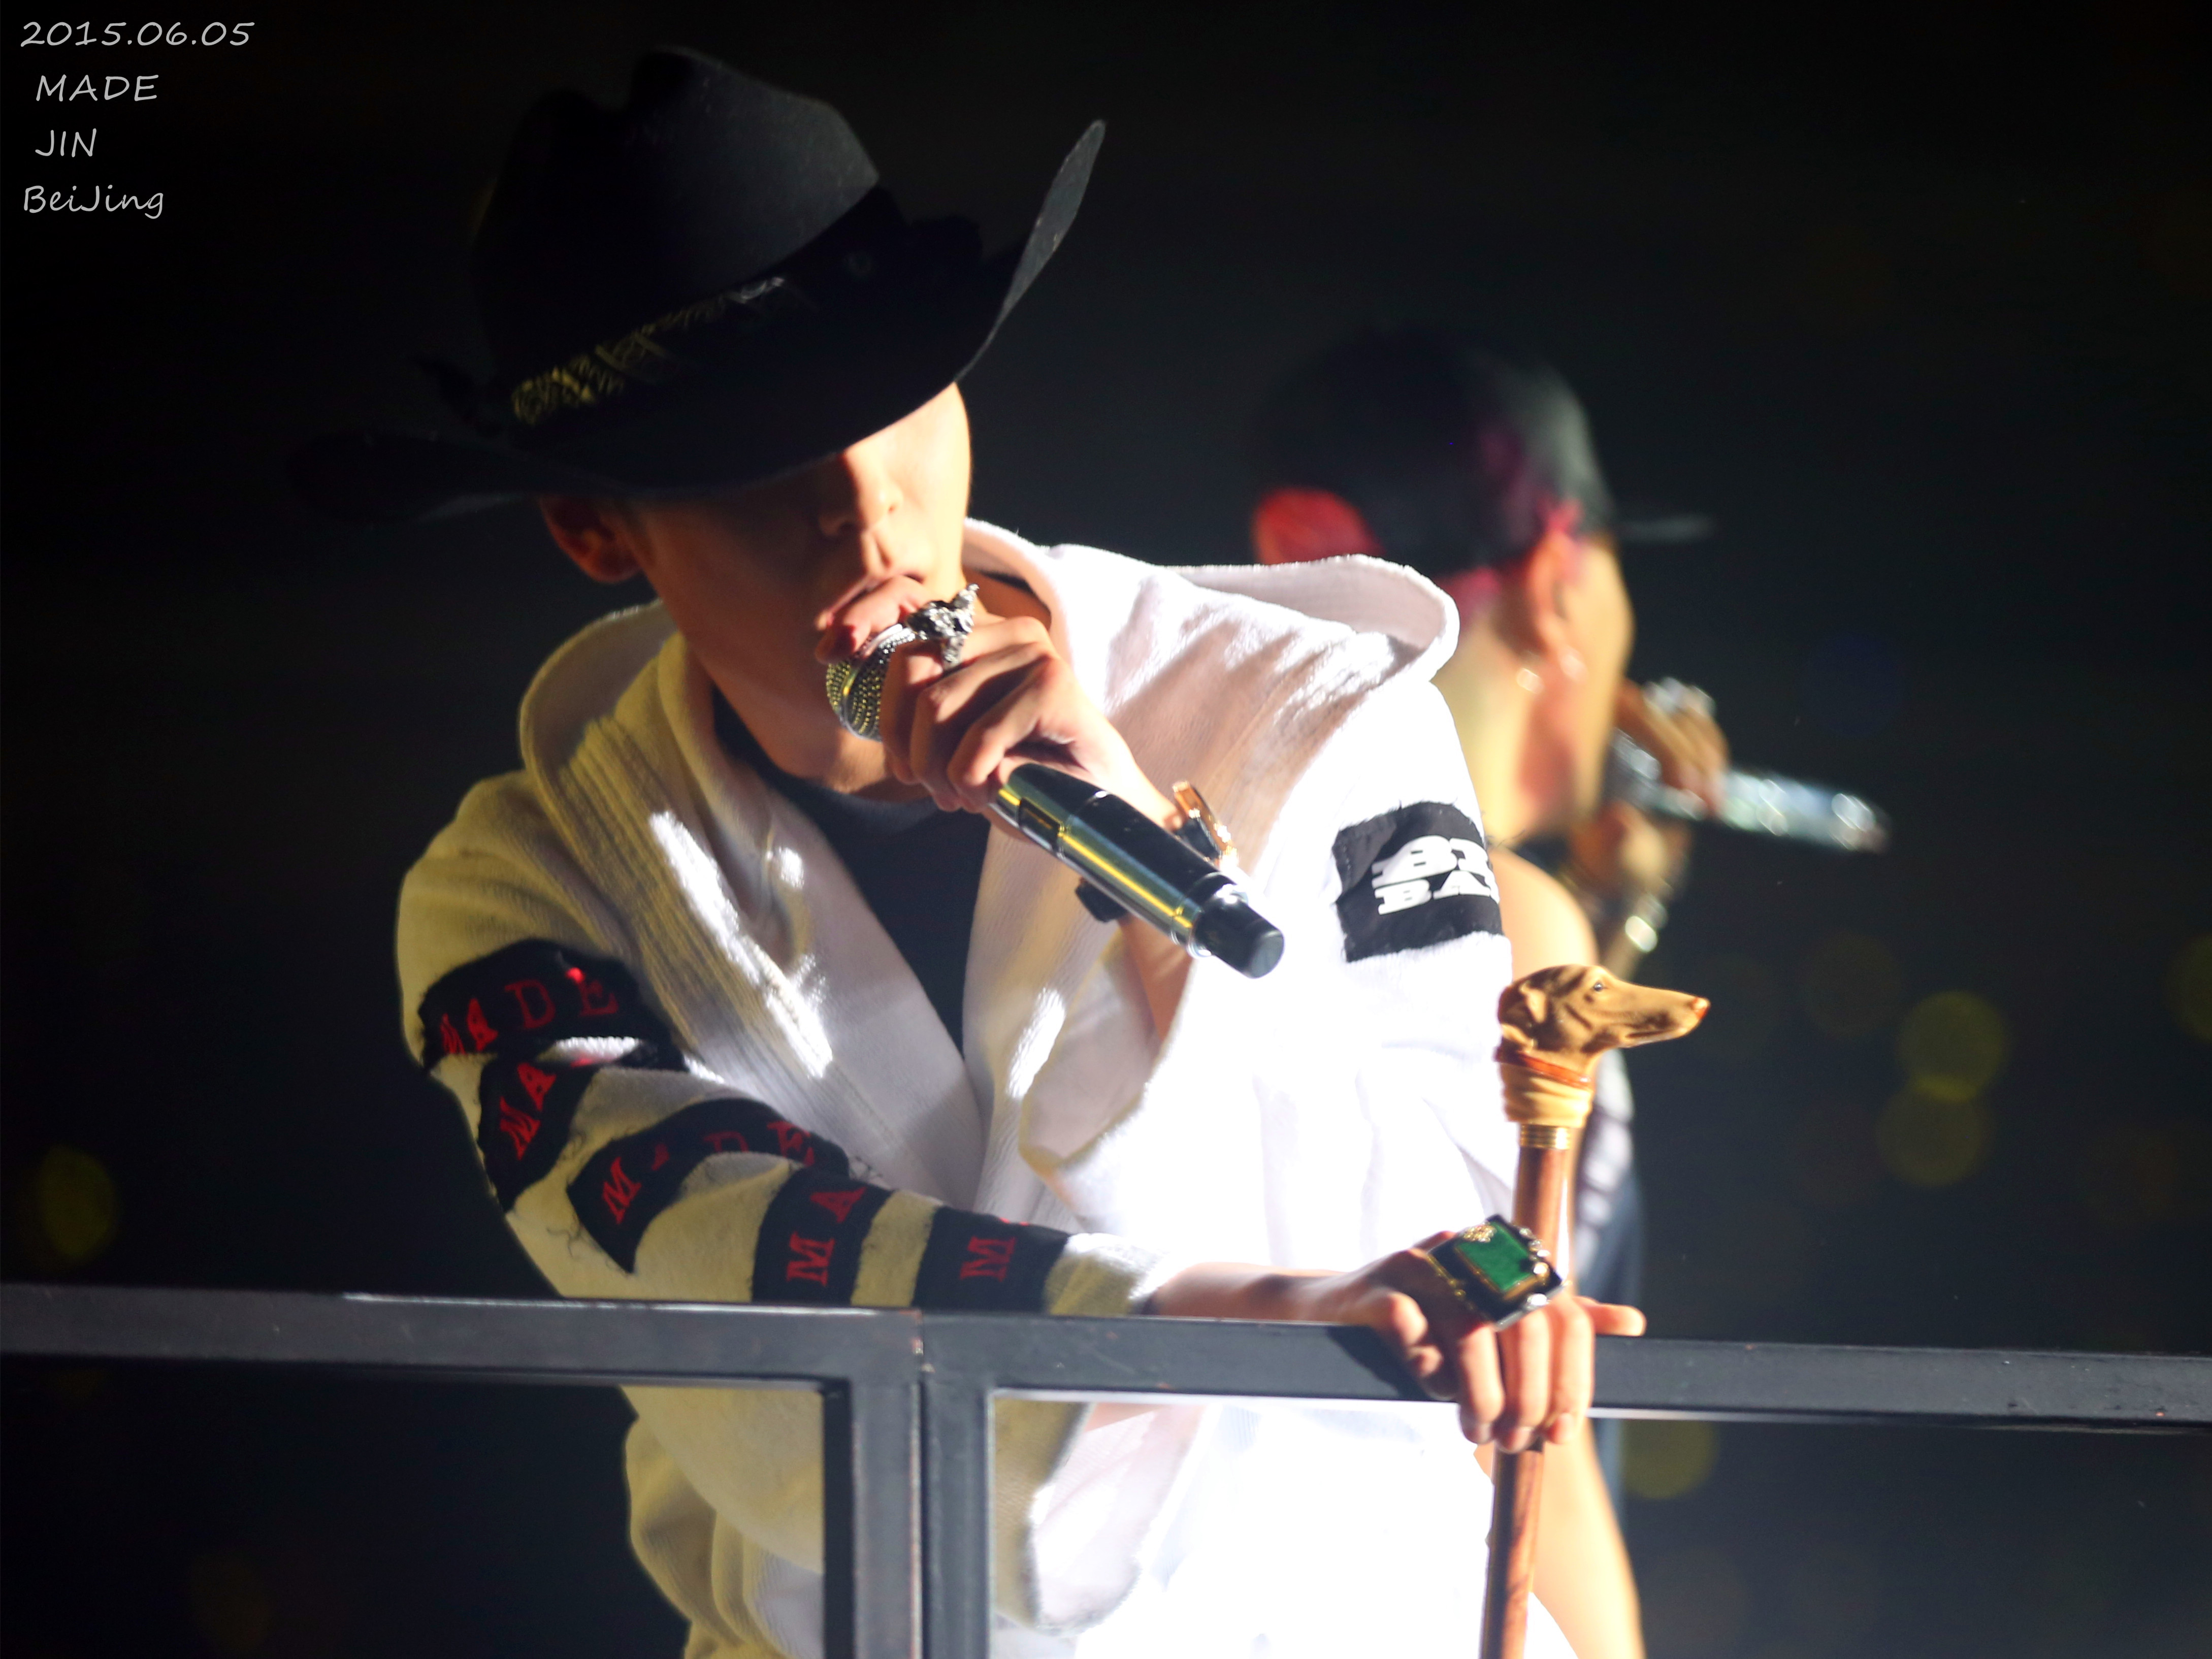 BIGBANG - Made Tour 2015 - Beijing - 05jun2015 - G-Jin - 16.jpg